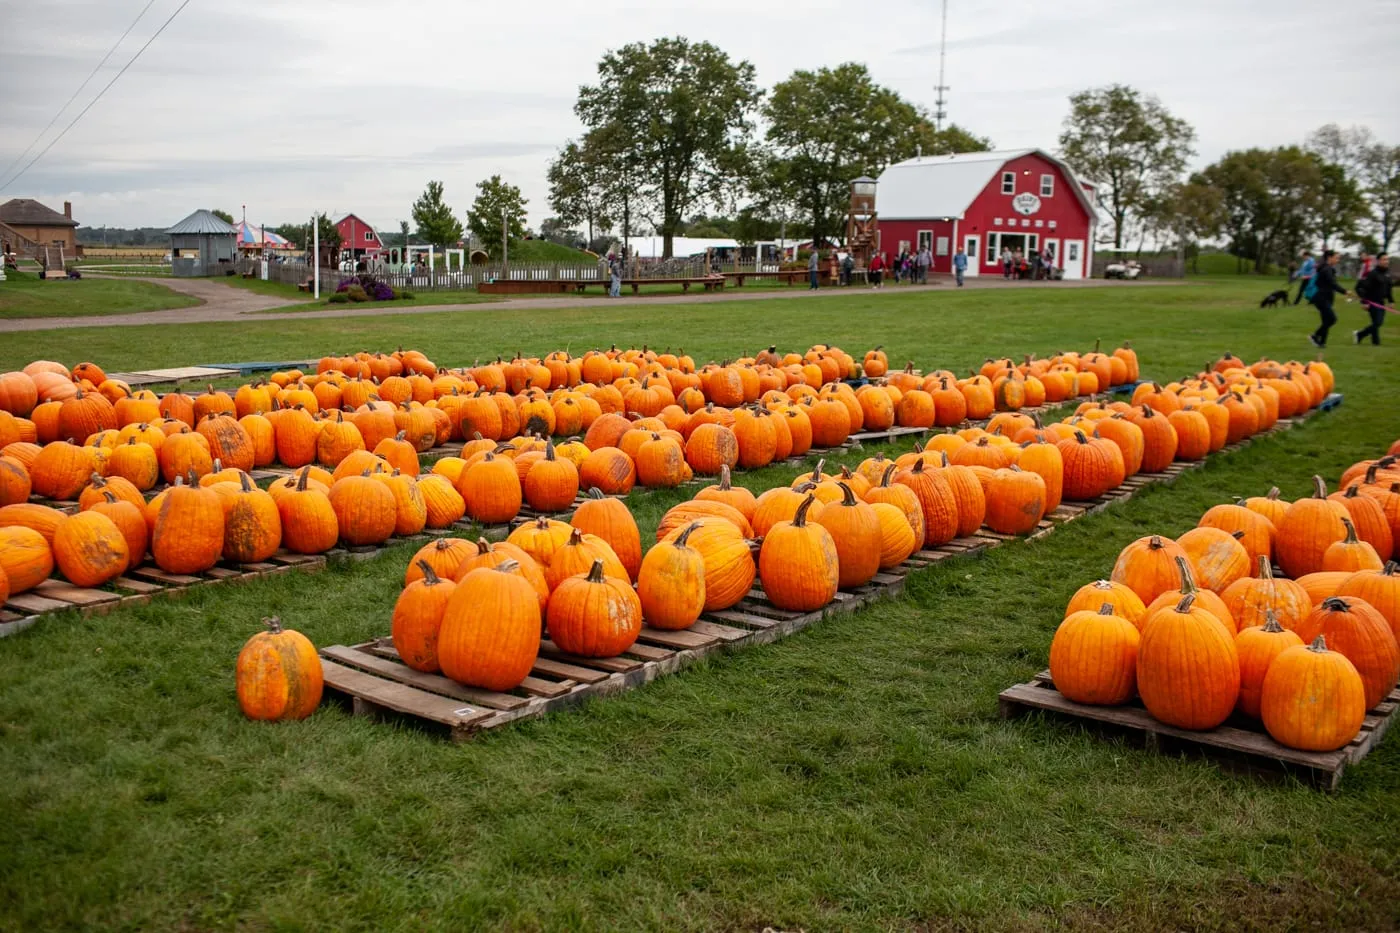 Pumpkin patch at Richardson Adventure Farm in Spring Grove, Illinois.